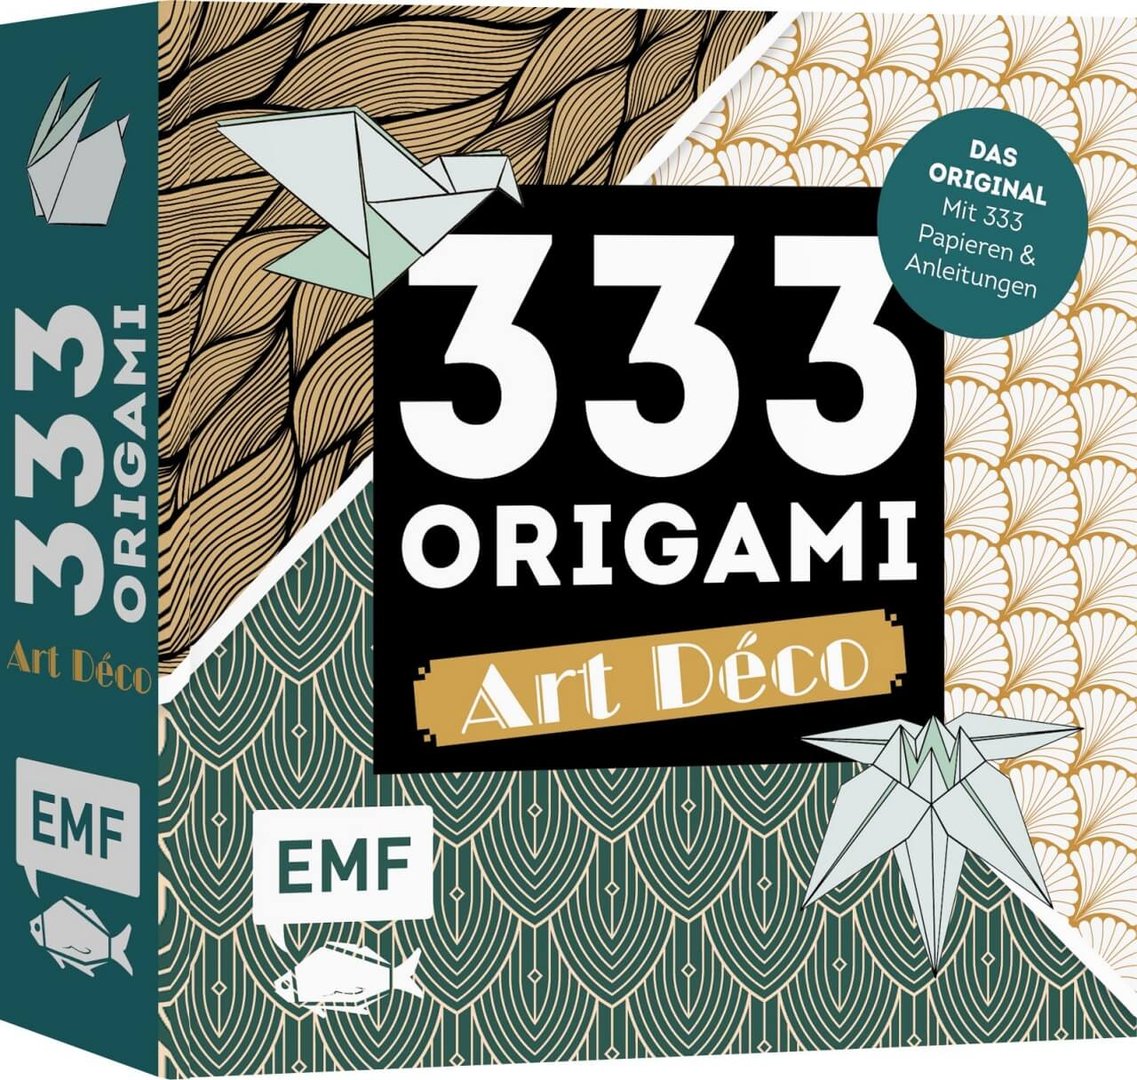 EMF 333 Origami Art Déco